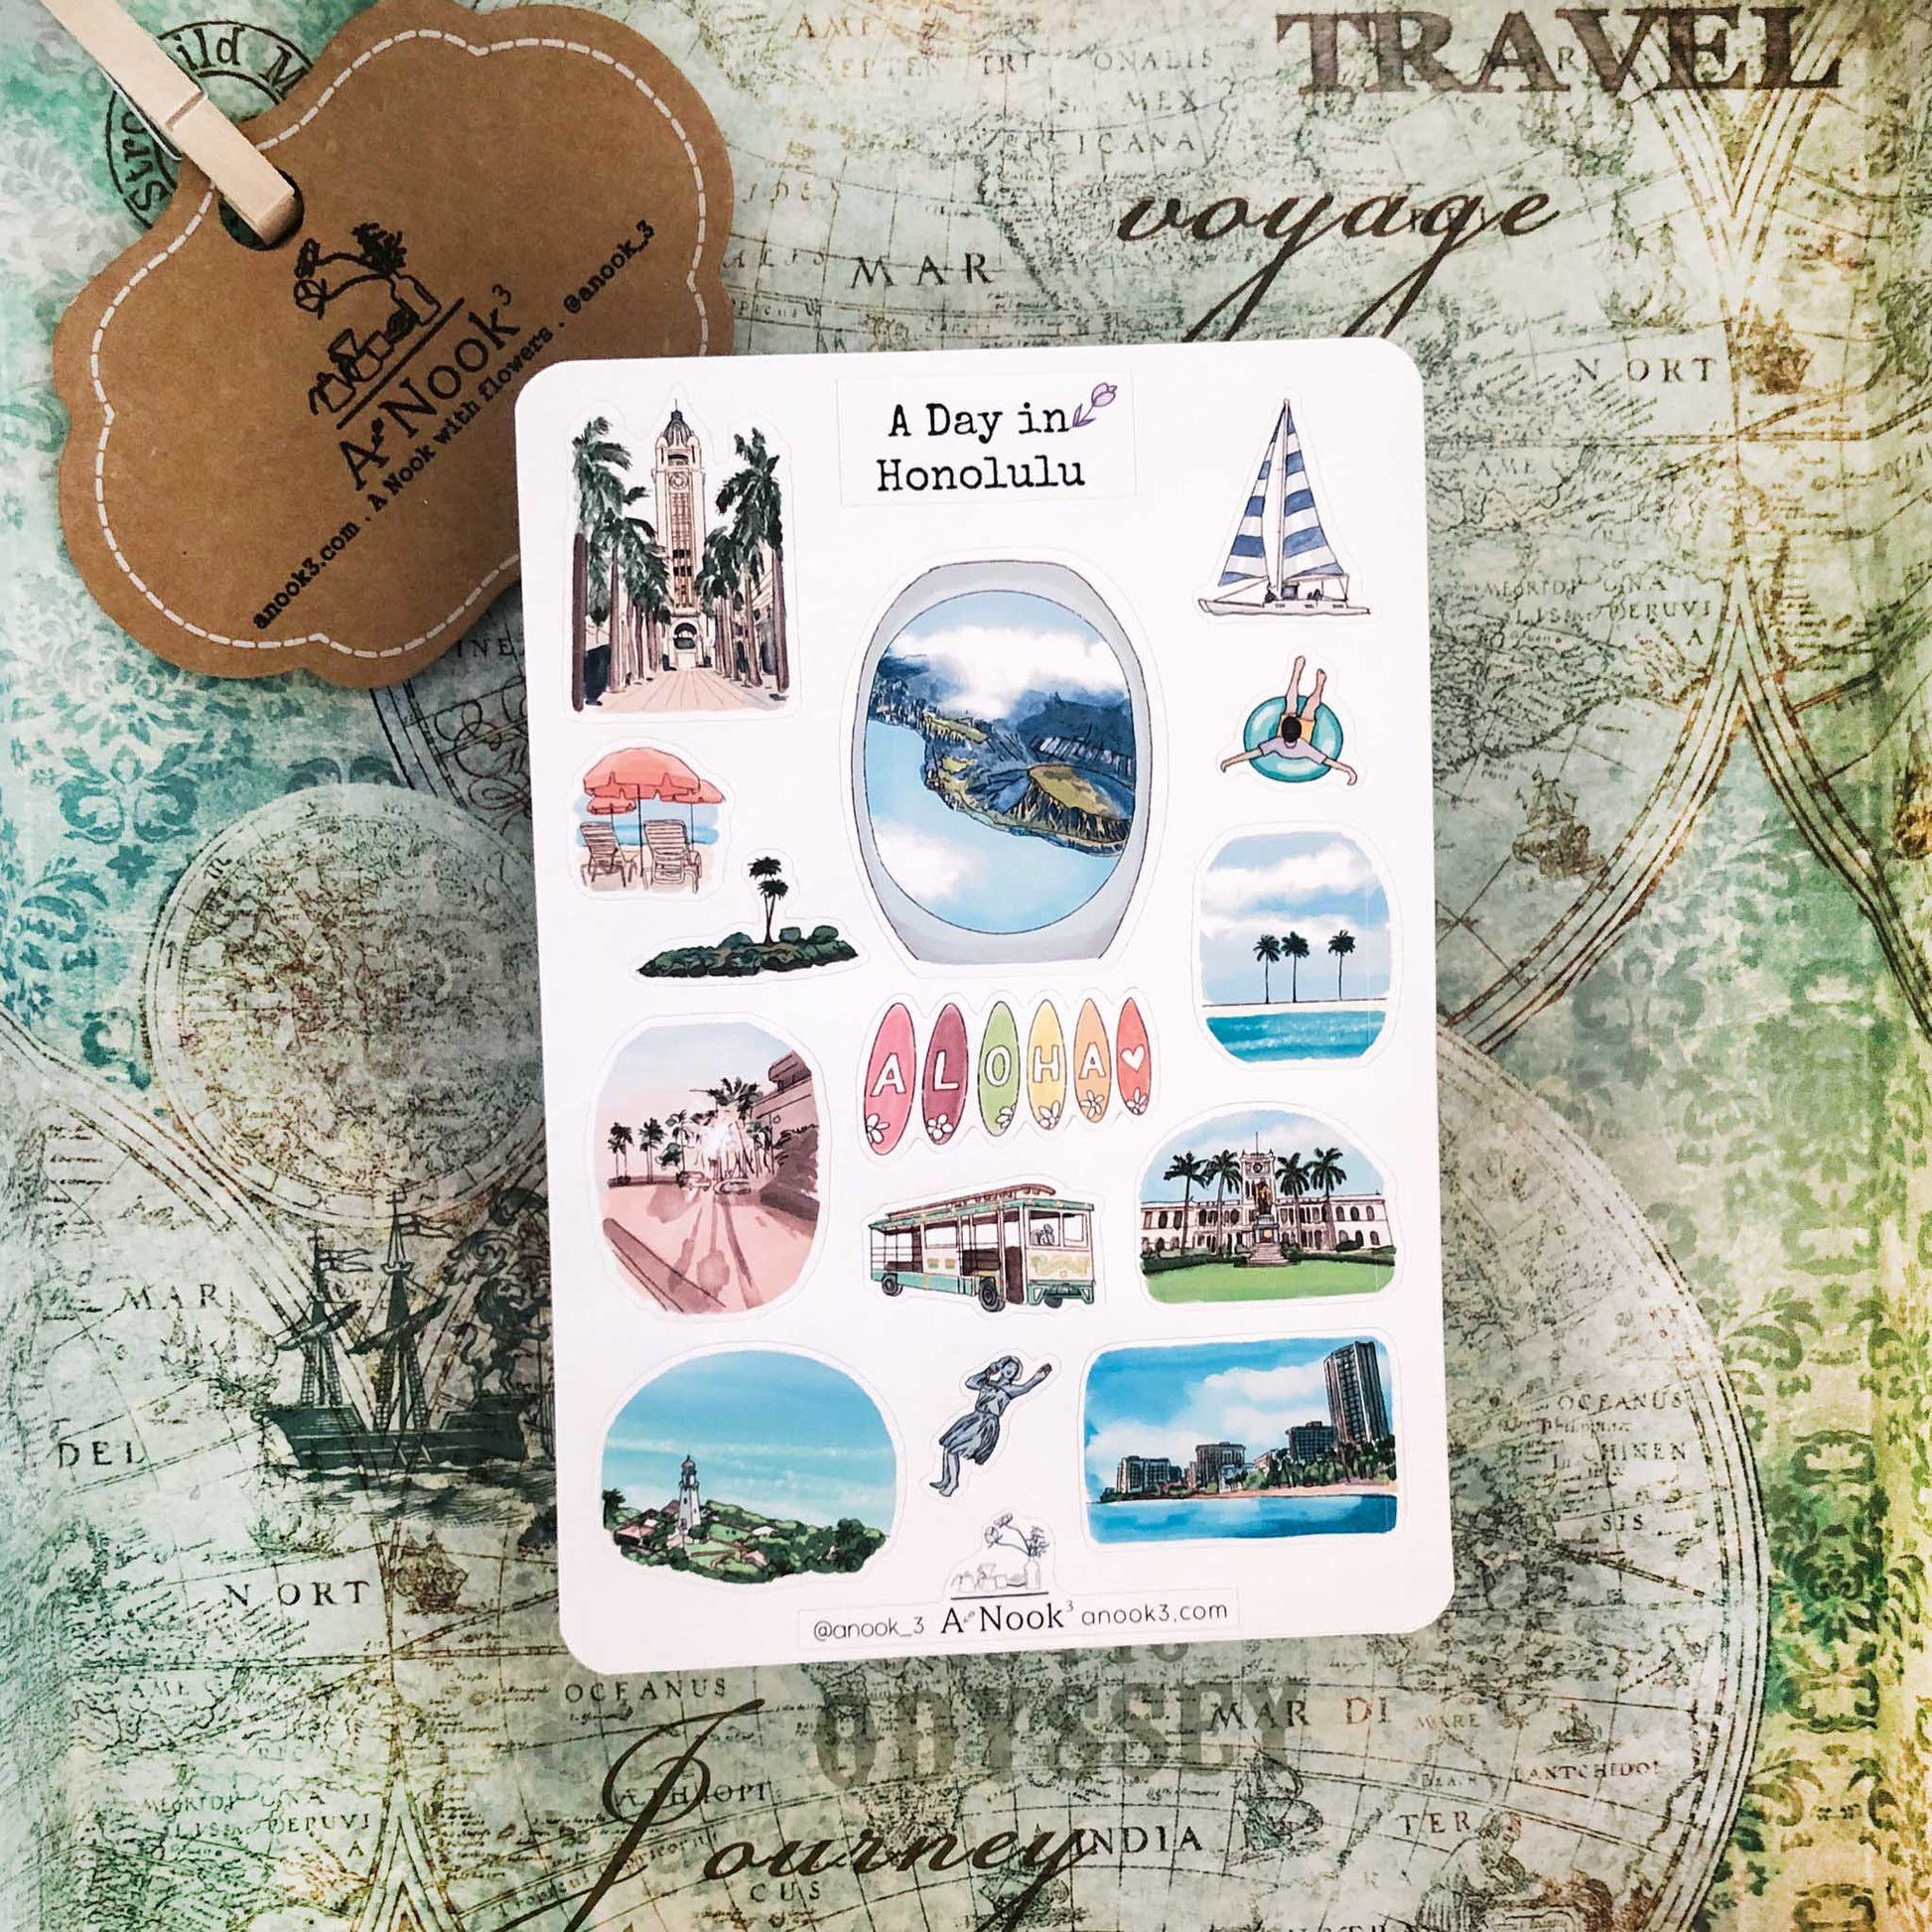 Travel scrapbook stickers  Travel journal scrapbook, Scrapbook stickers  printable, Travel stickers printable